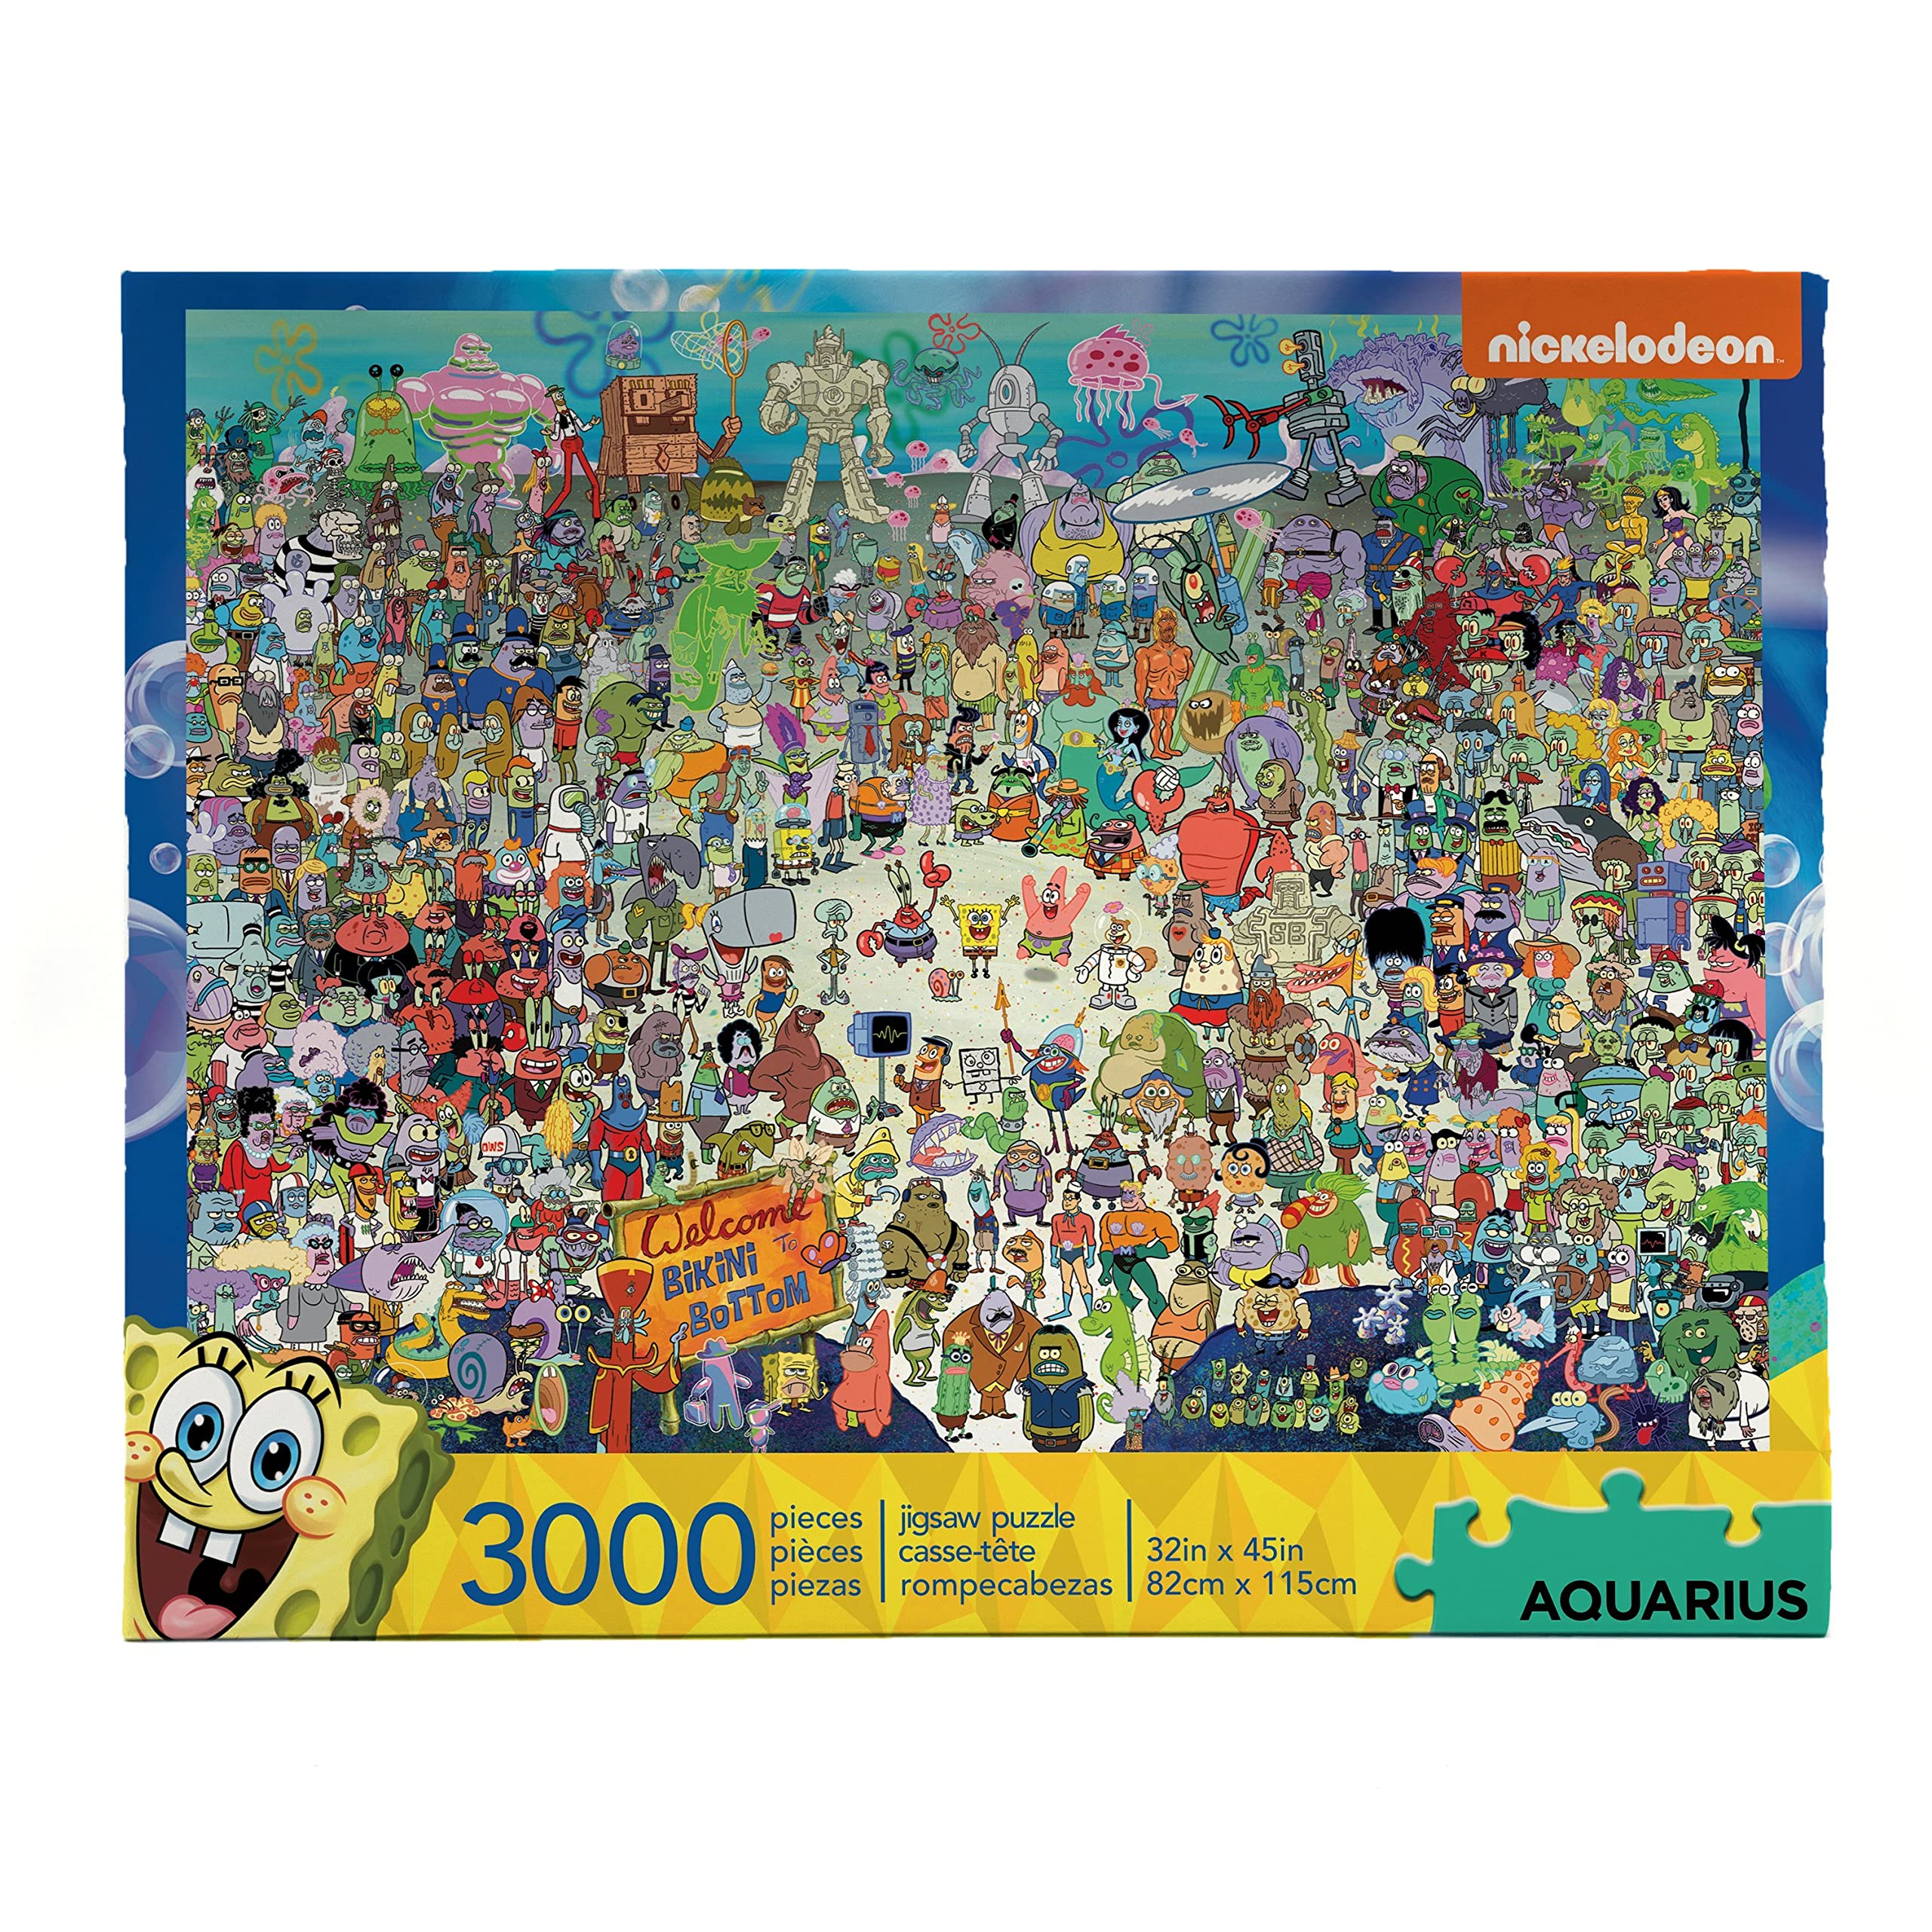 Nickelodeon ニコロデオン SpongeBob スポンジボブ Square Pants Cast Jigsaw Puzzle 3000ピース ジグソーパズル 並行輸入品